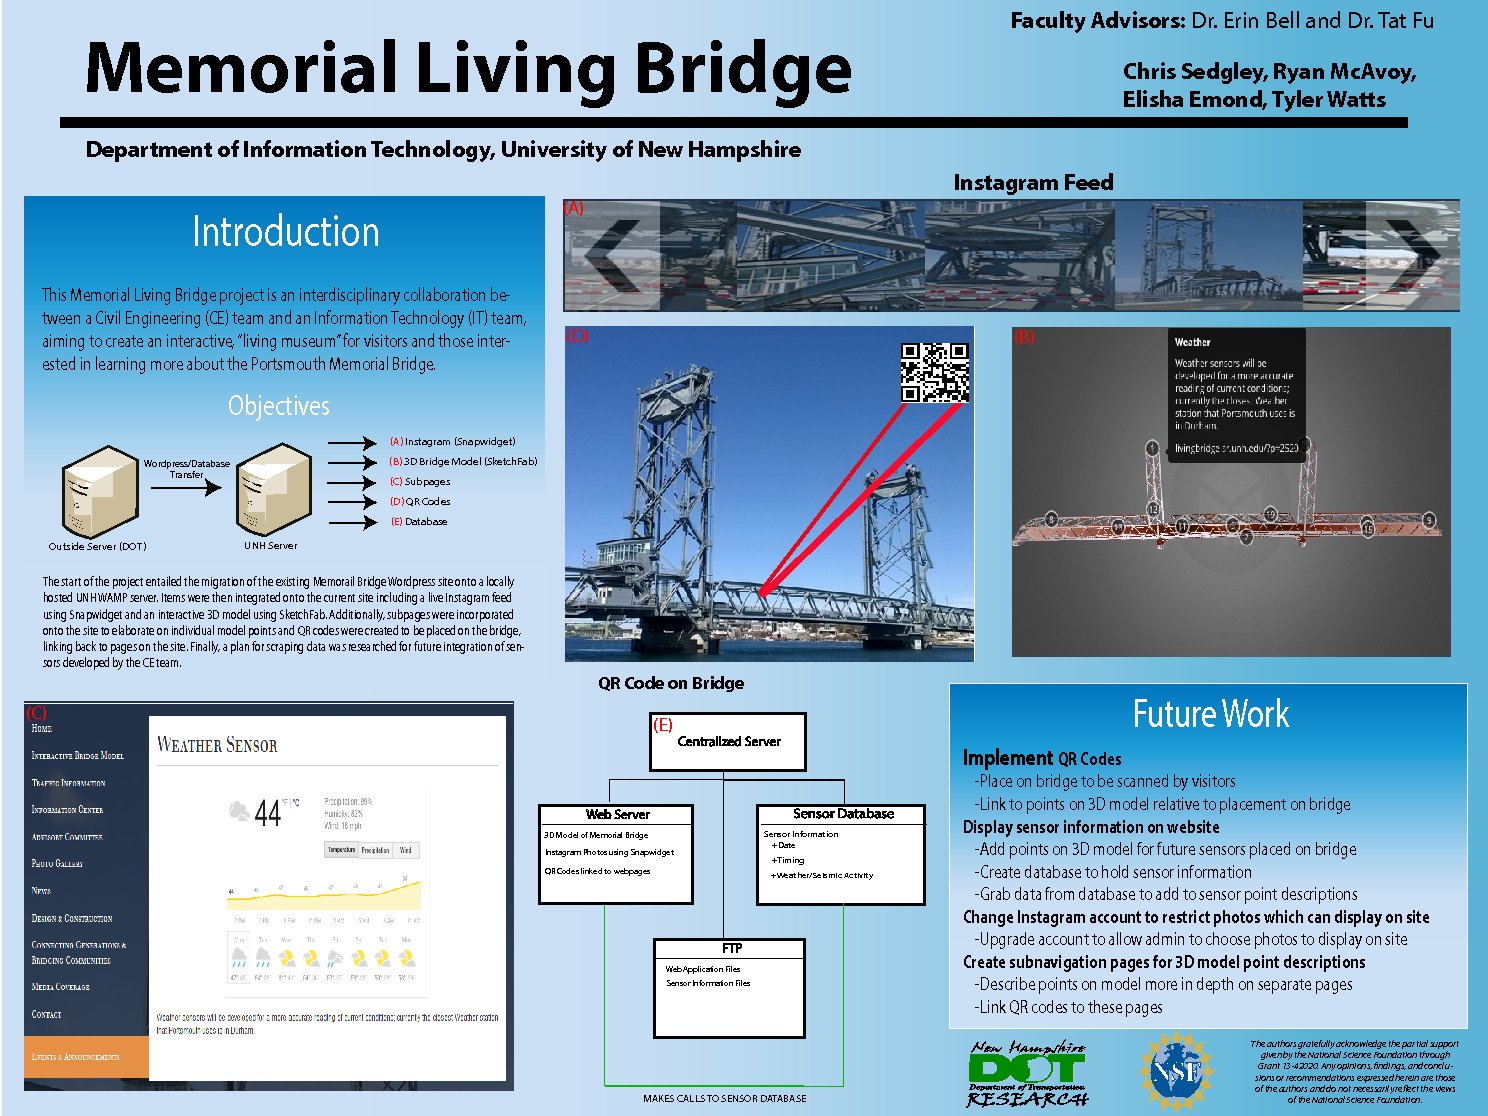 Memorial Living Bridge by cbh34